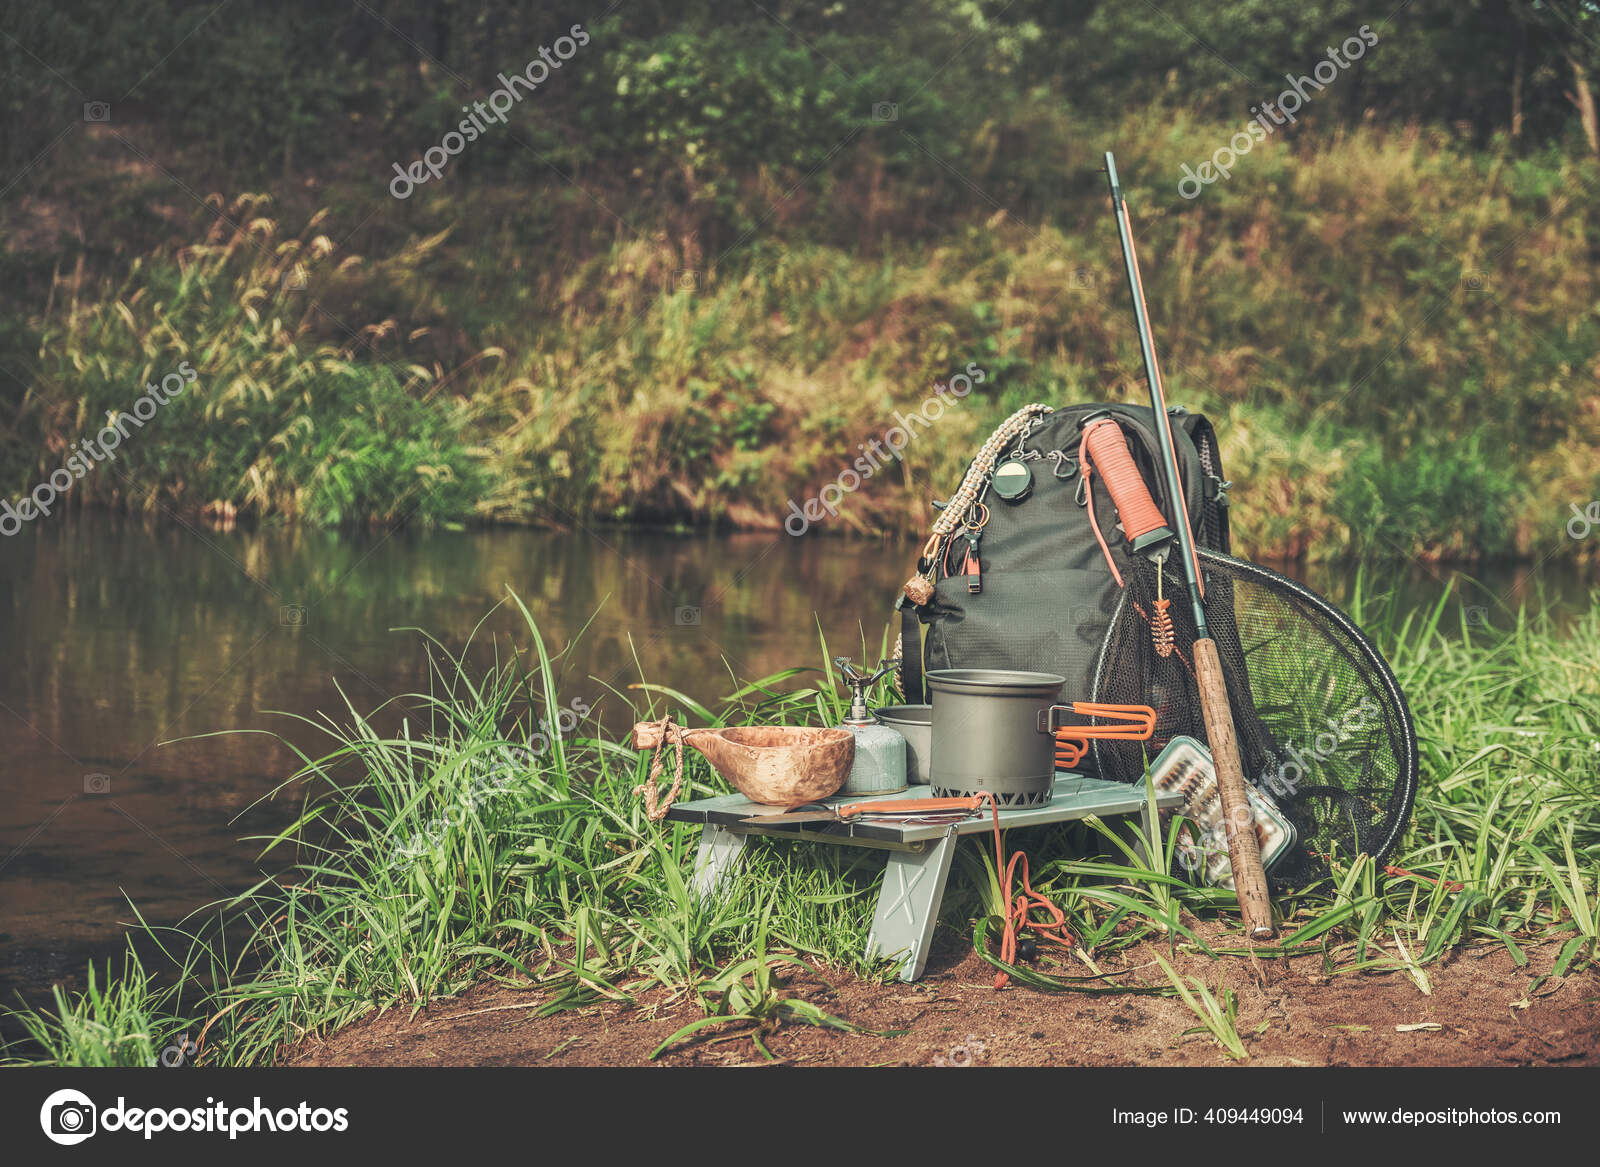 https://st4.depositphotos.com/16223982/40944/i/1600/depositphotos_409449094-stock-photo-backpack-fishing-rod-river-fishing.jpg